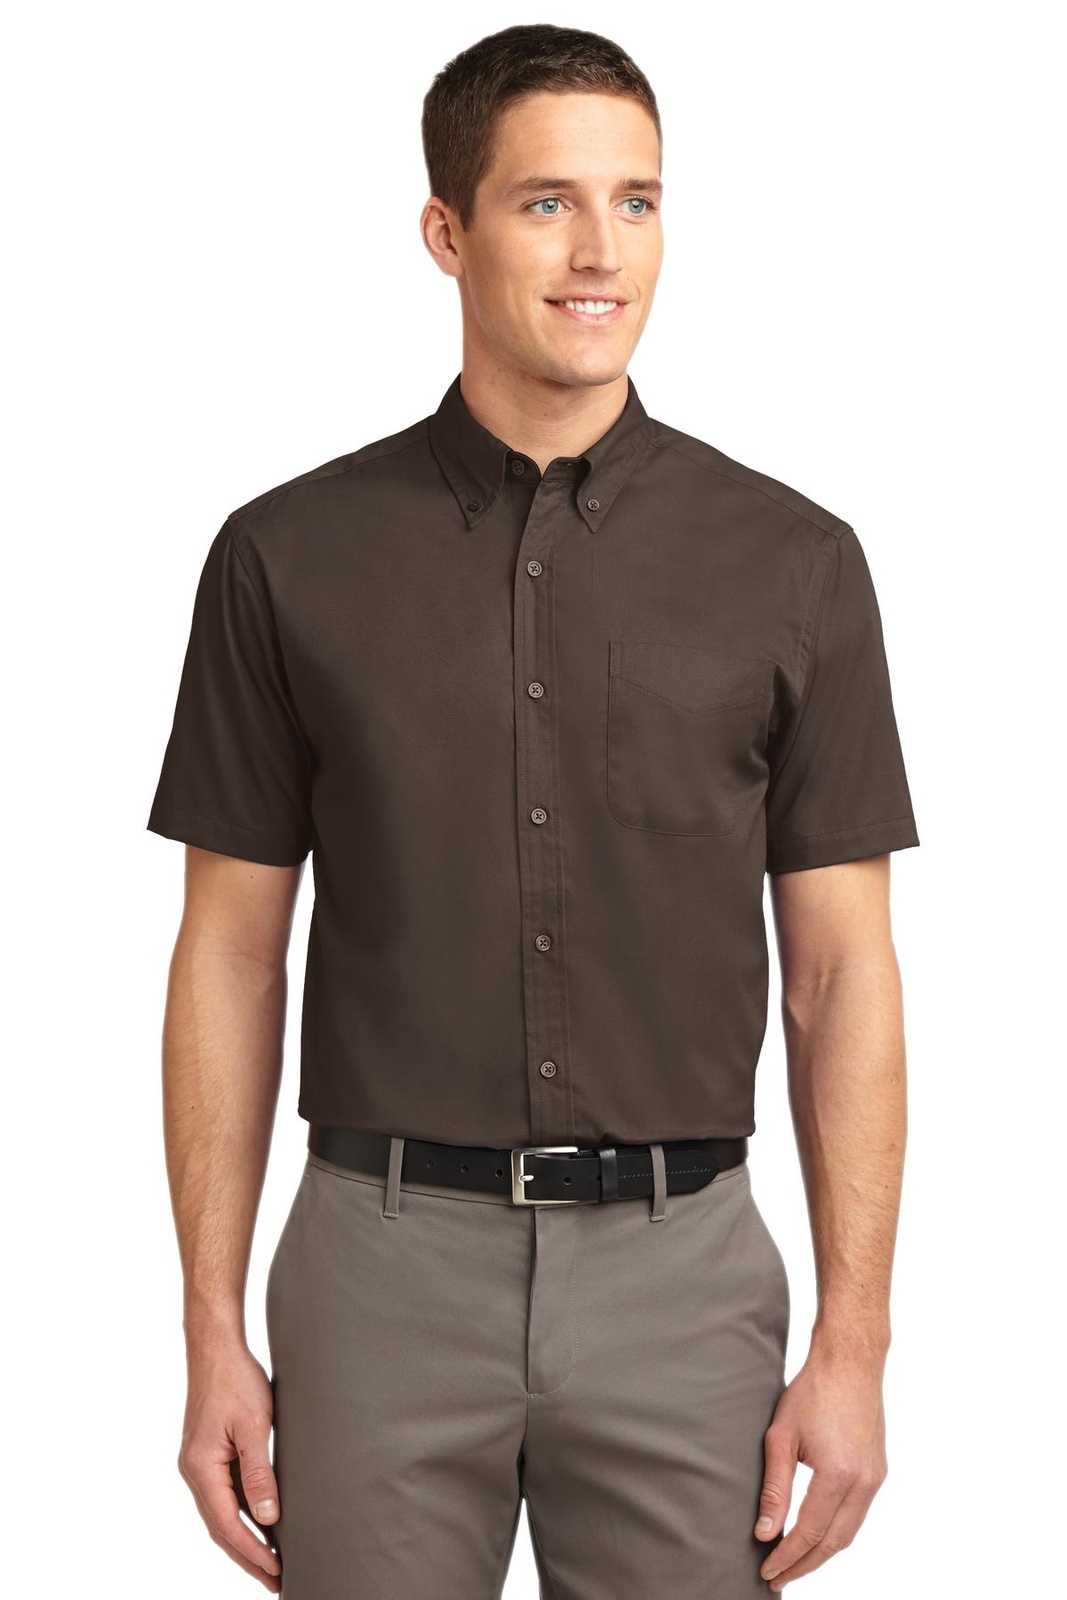 Port Authority S508 Short Sleeve Easy Care Shirt - Coffee Bean Light Stone - HIT a Double - 1